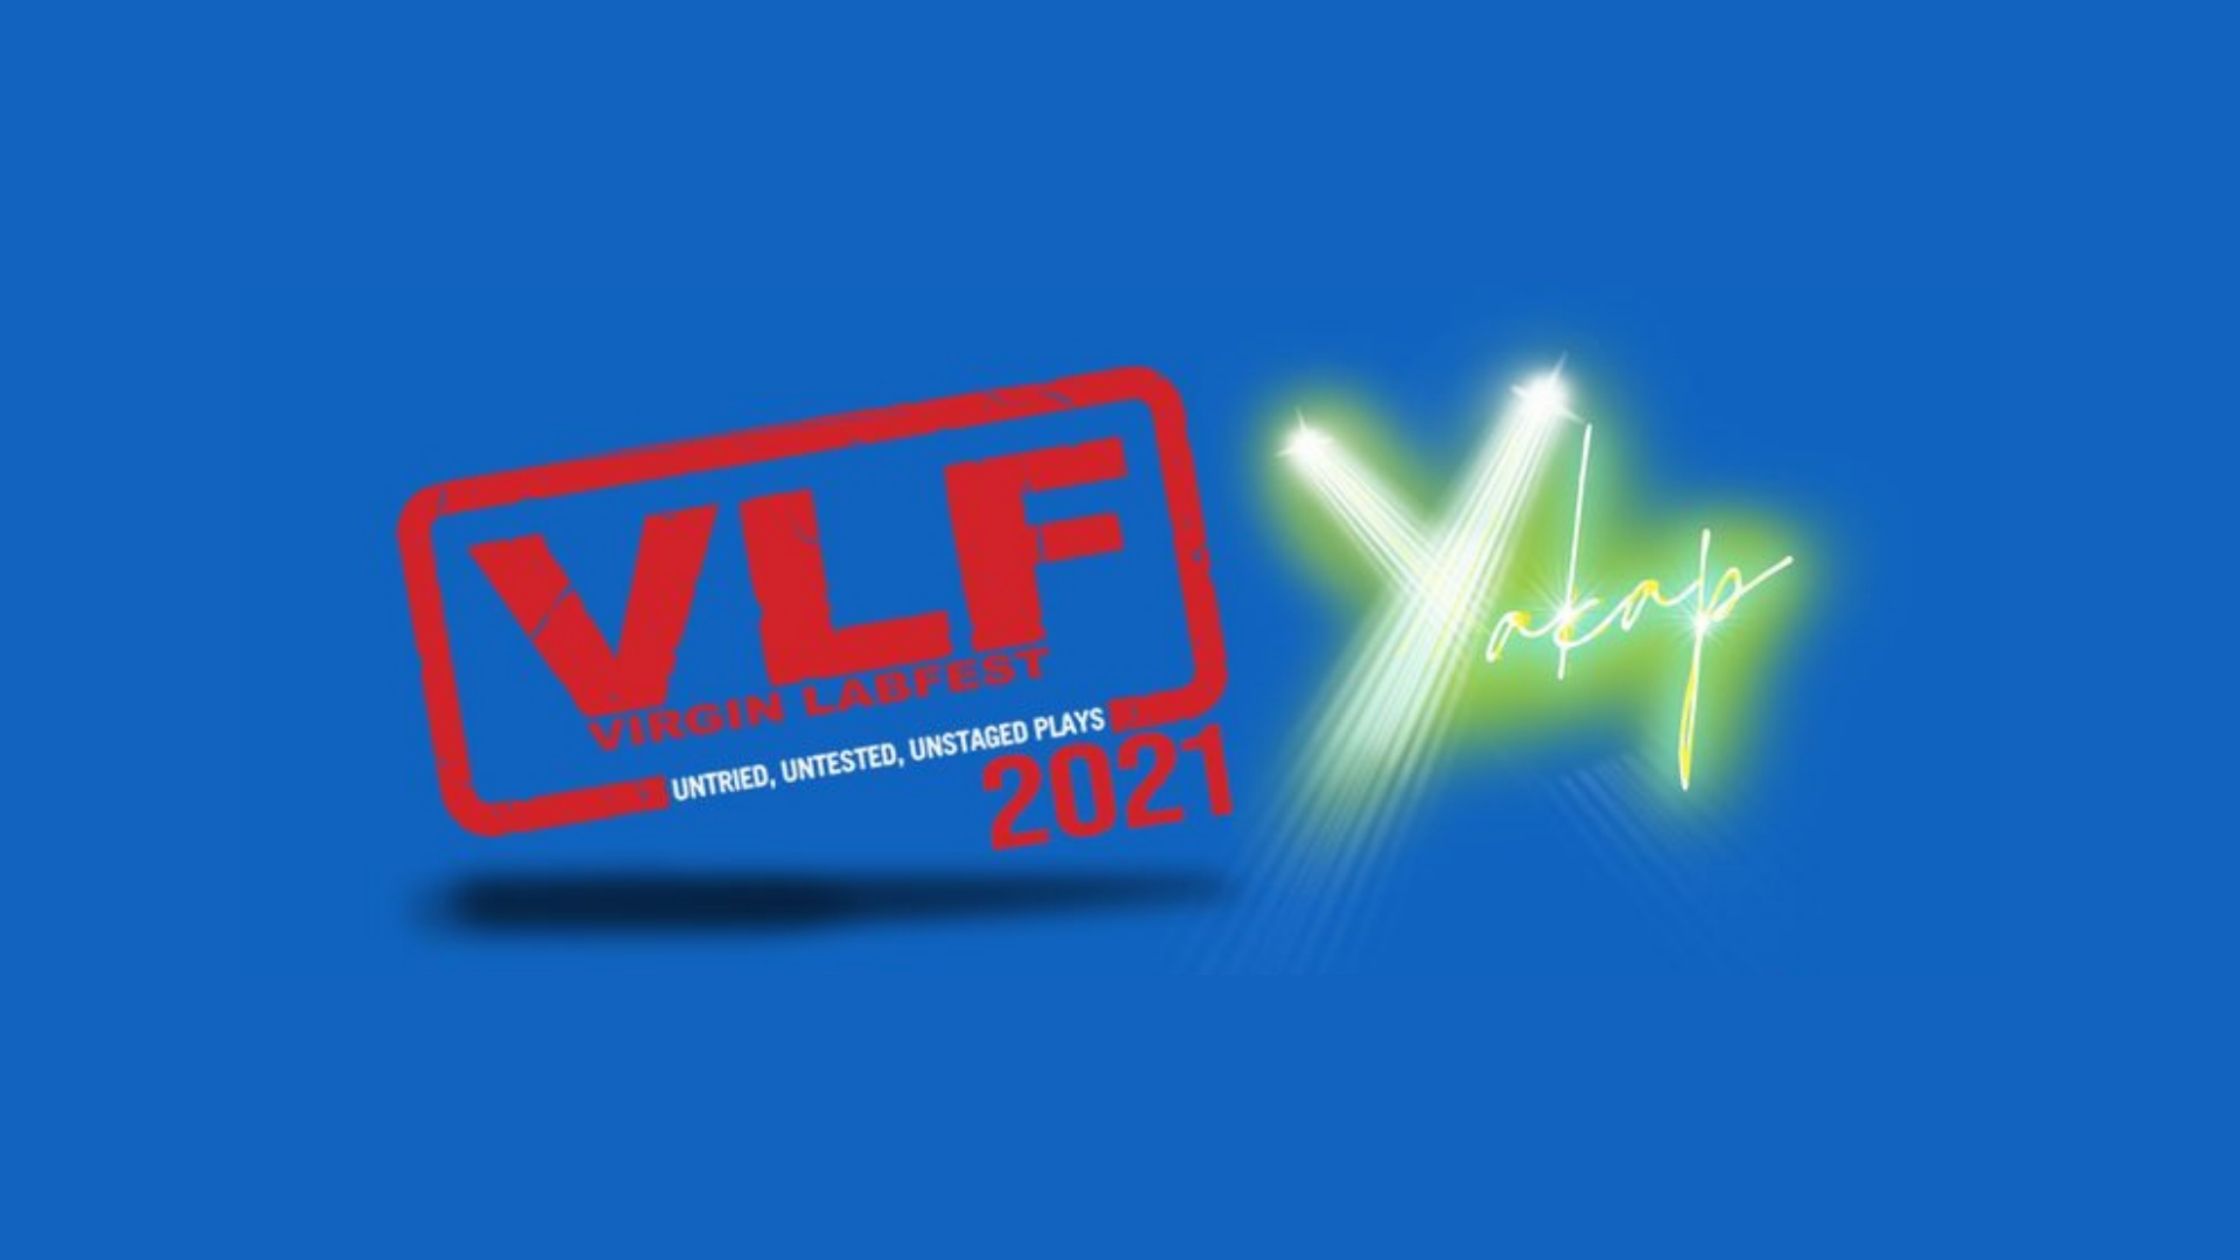 Now Streaming: Virgin Labfest 2021 “Yakap” is Online